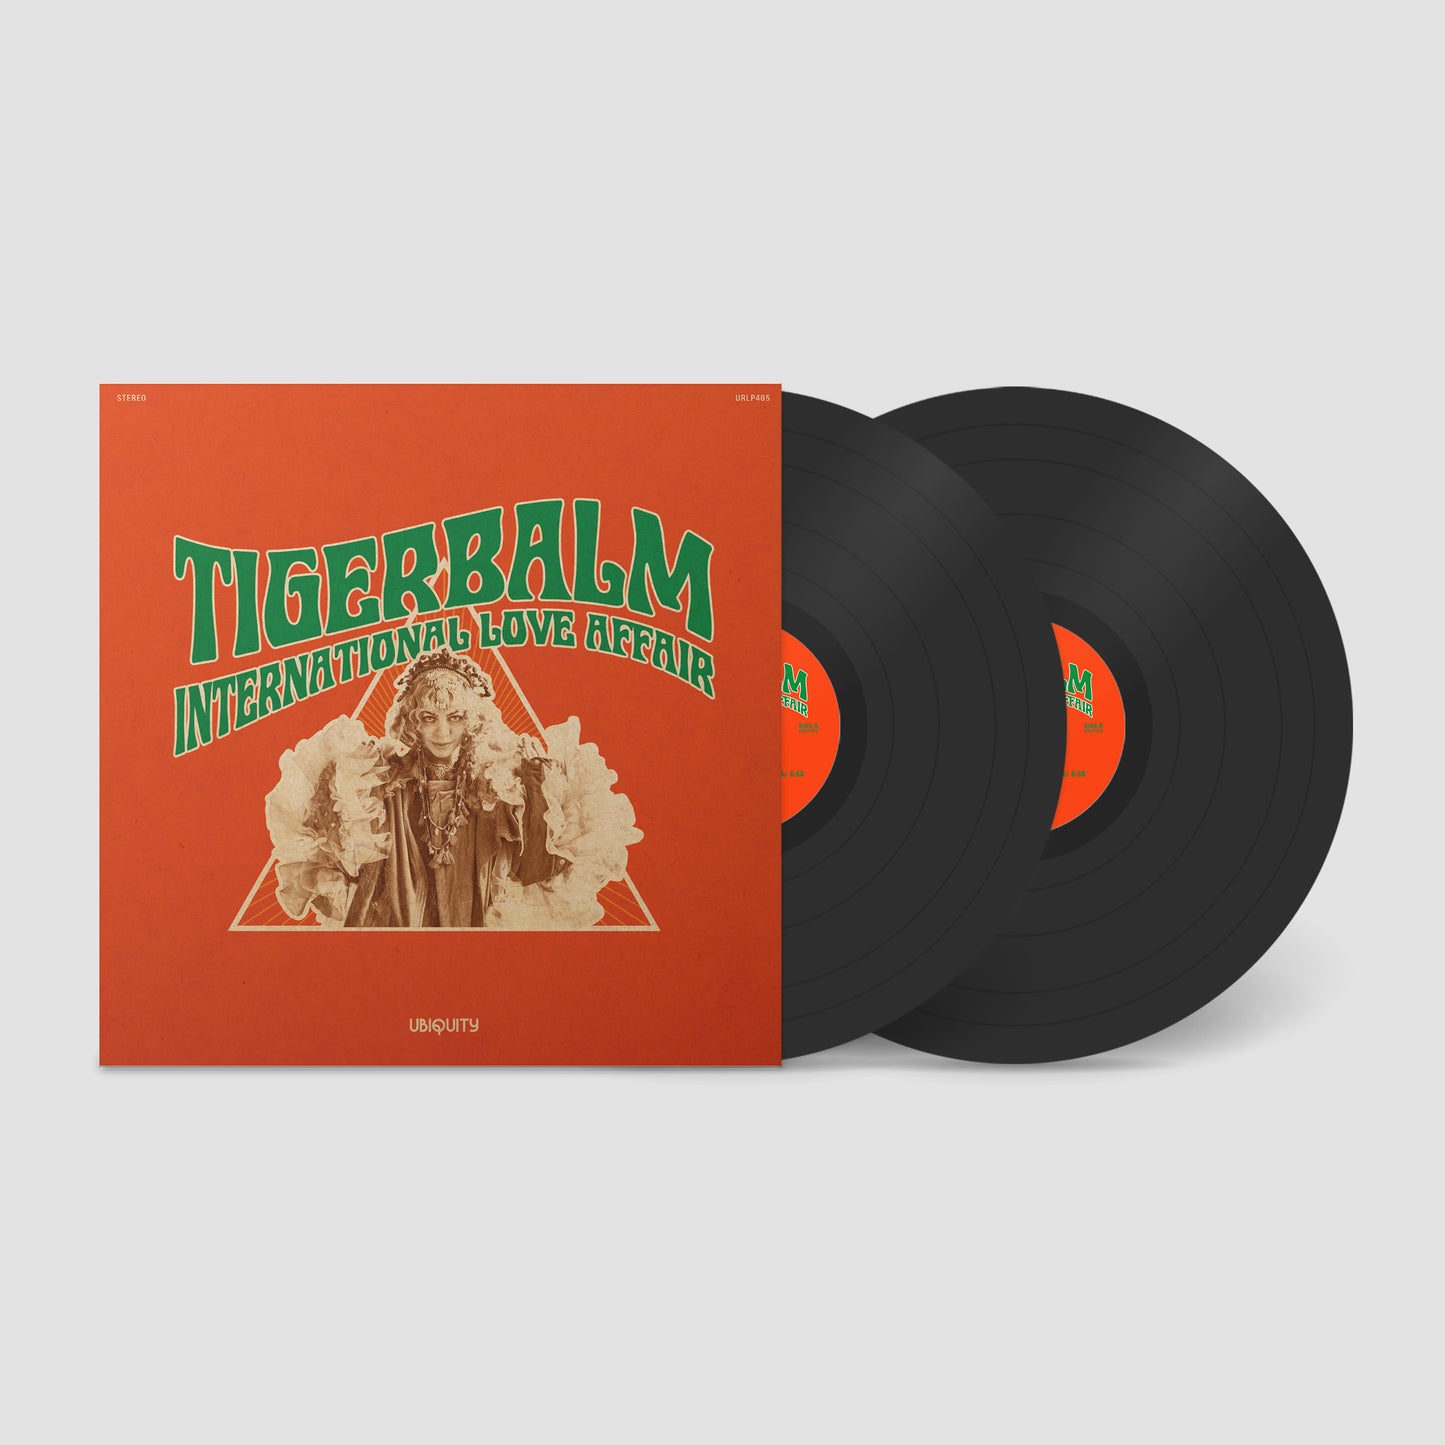 Tigerbalm "International Love Affair" Double LP